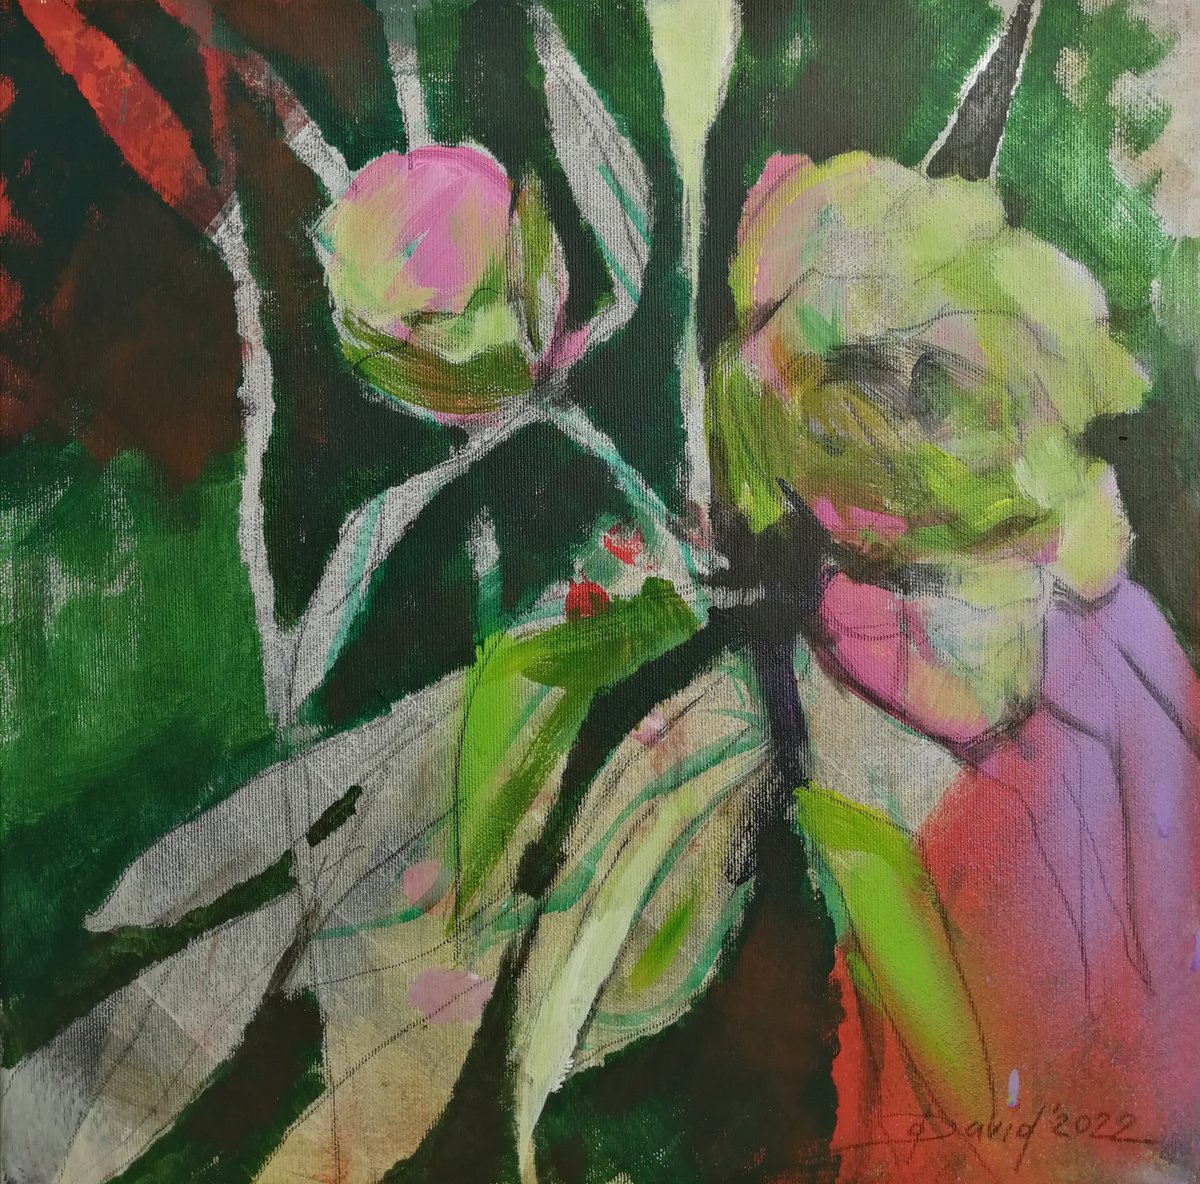 Green-pink peonies modern mixed media painting by Olga David